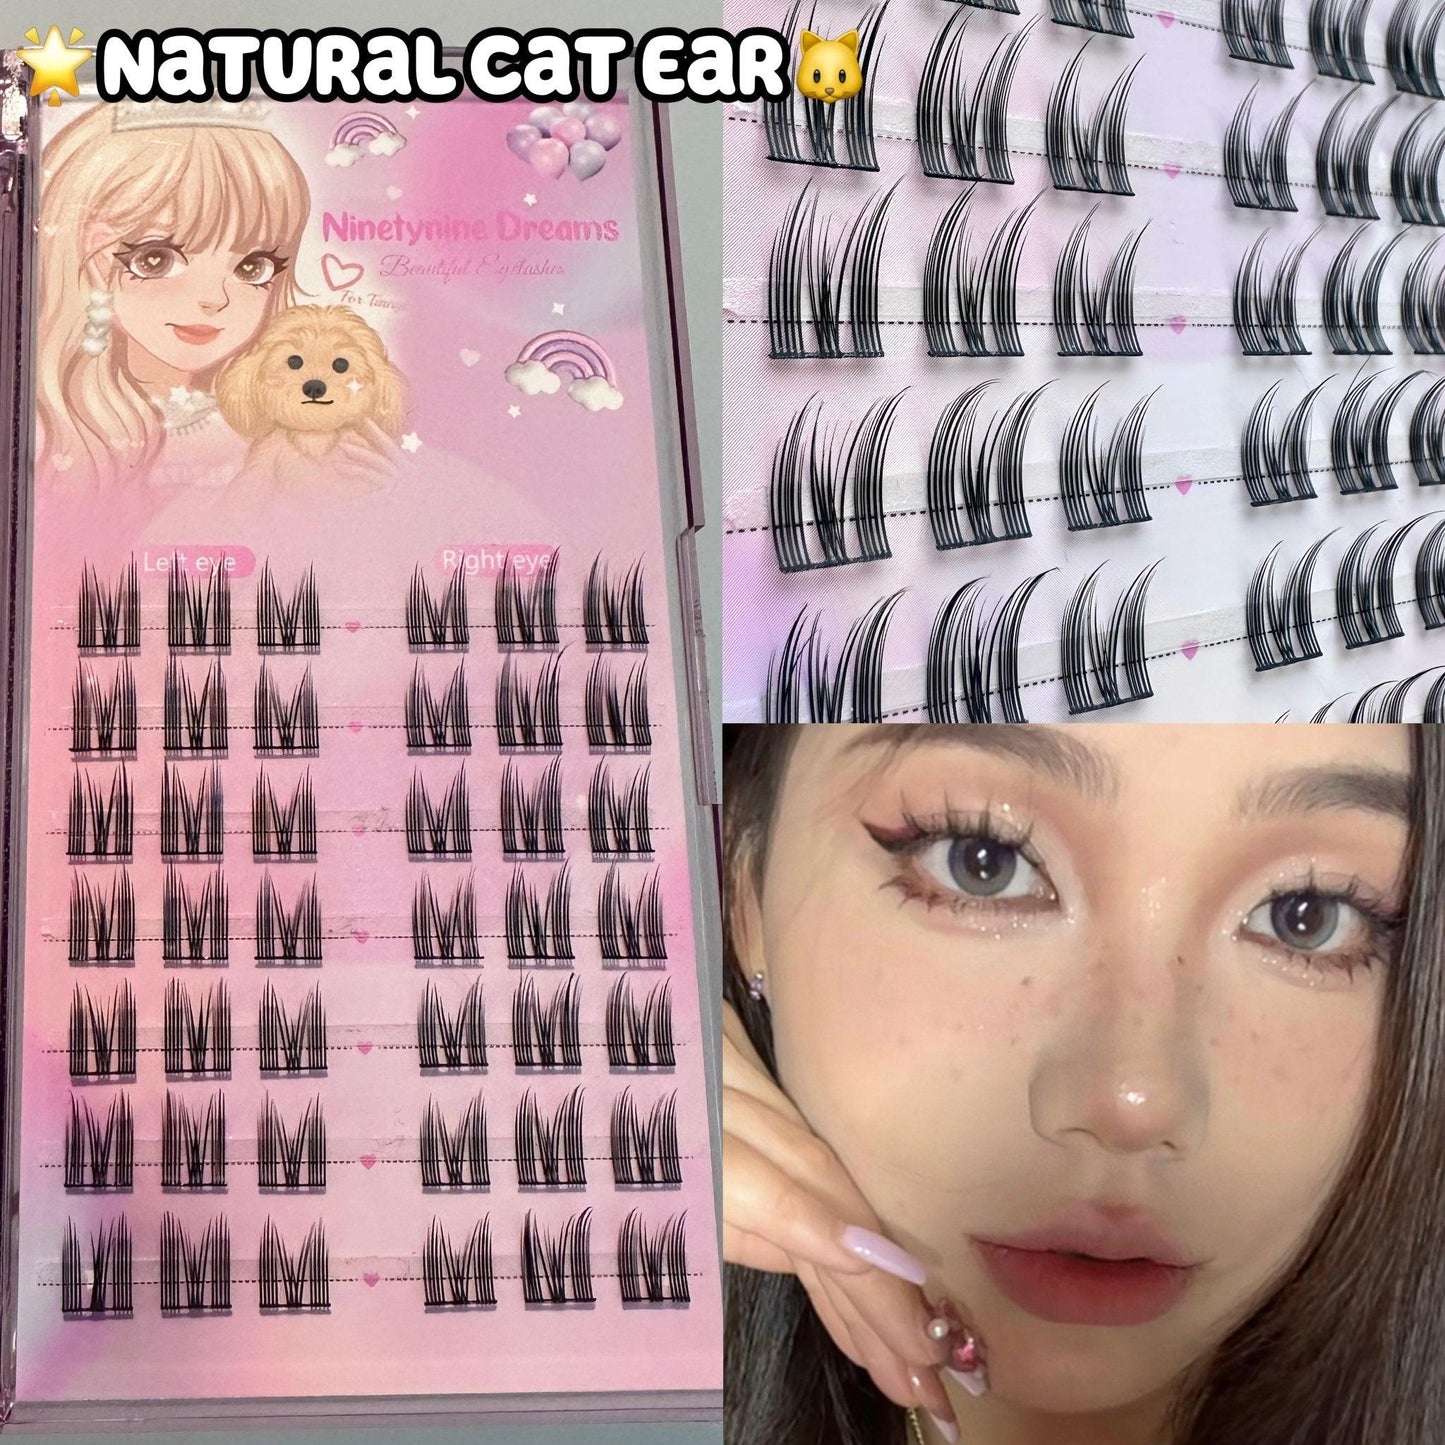 42PCs Natural Cat Ear Lashes - Ninetynine Dreams